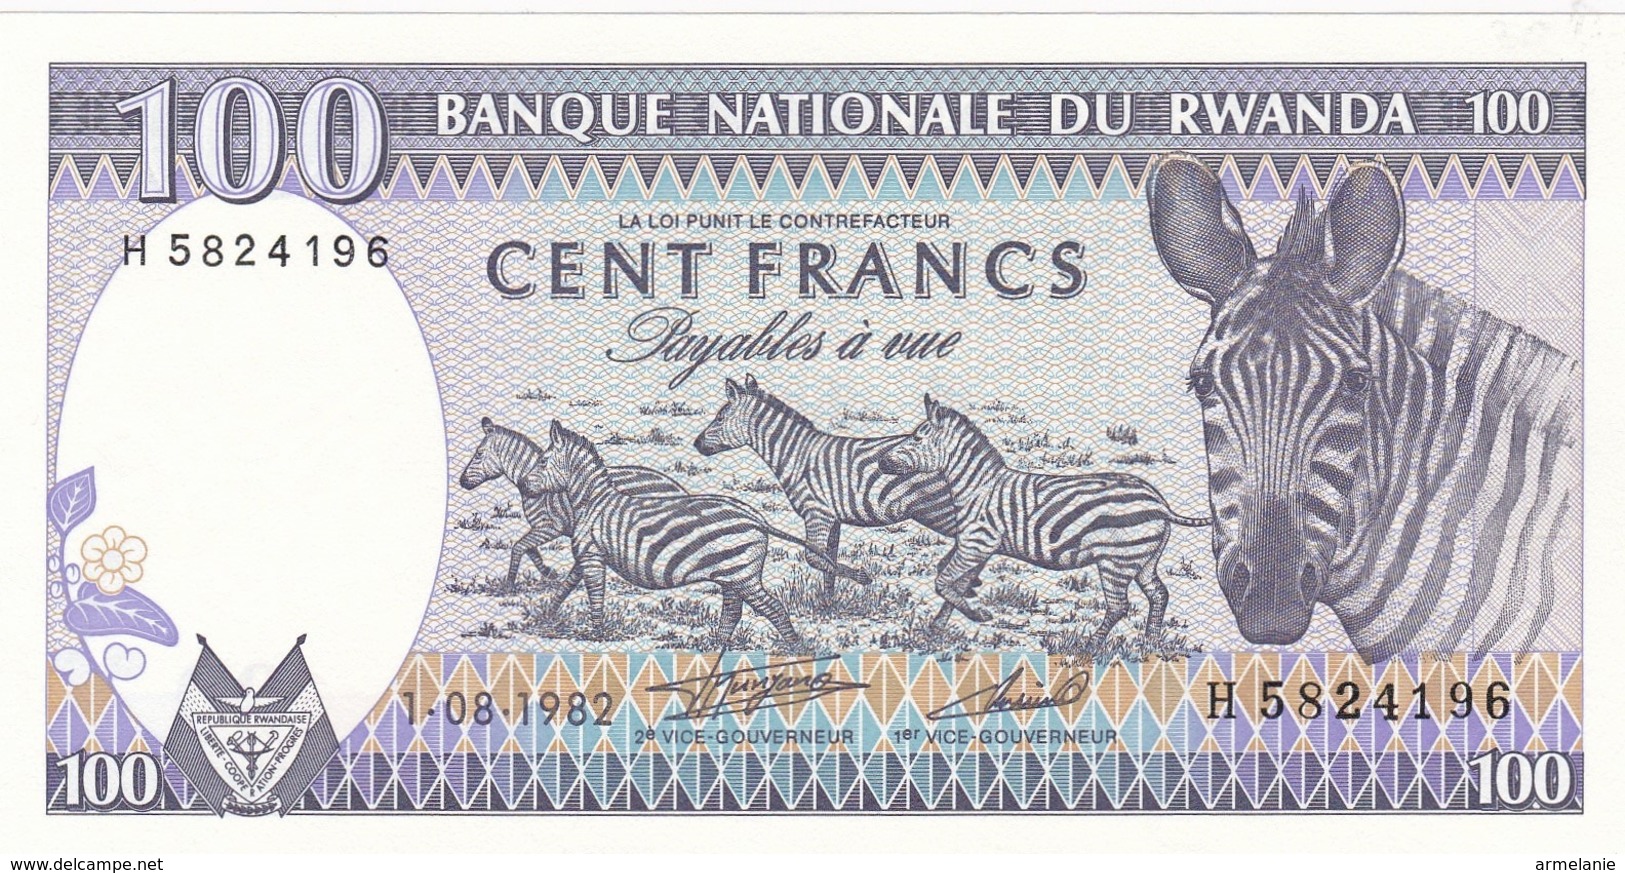 BILLET 100 FRANCS BANQUE NATIONALE DU RWANDA - Rwanda